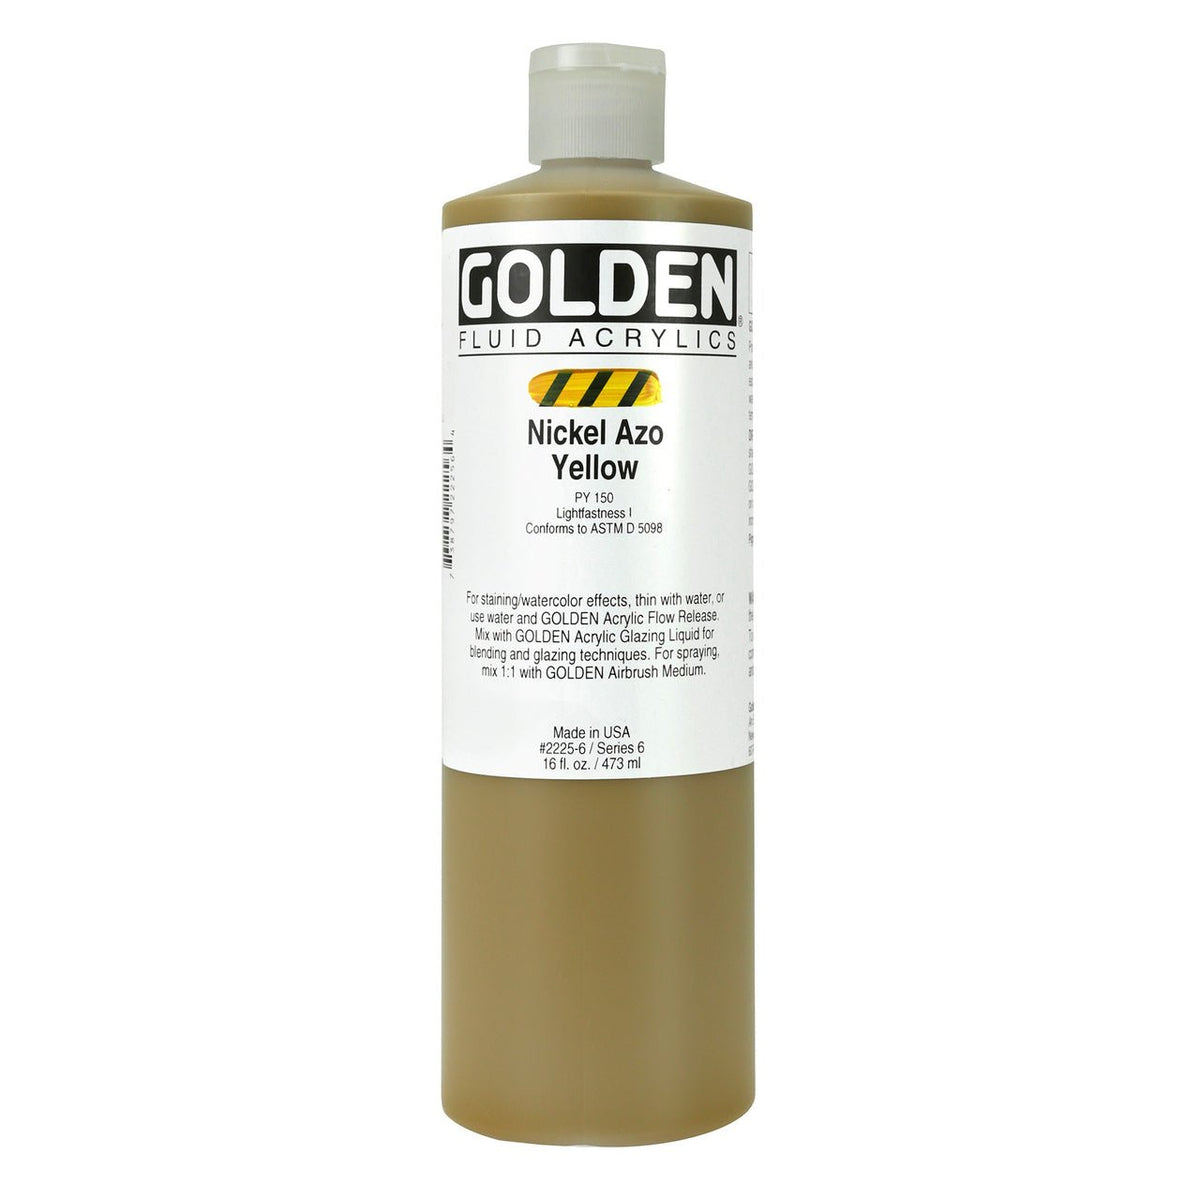 Golden Fluid Acrylic Nickel Azo Yellow 16 oz - merriartist.com